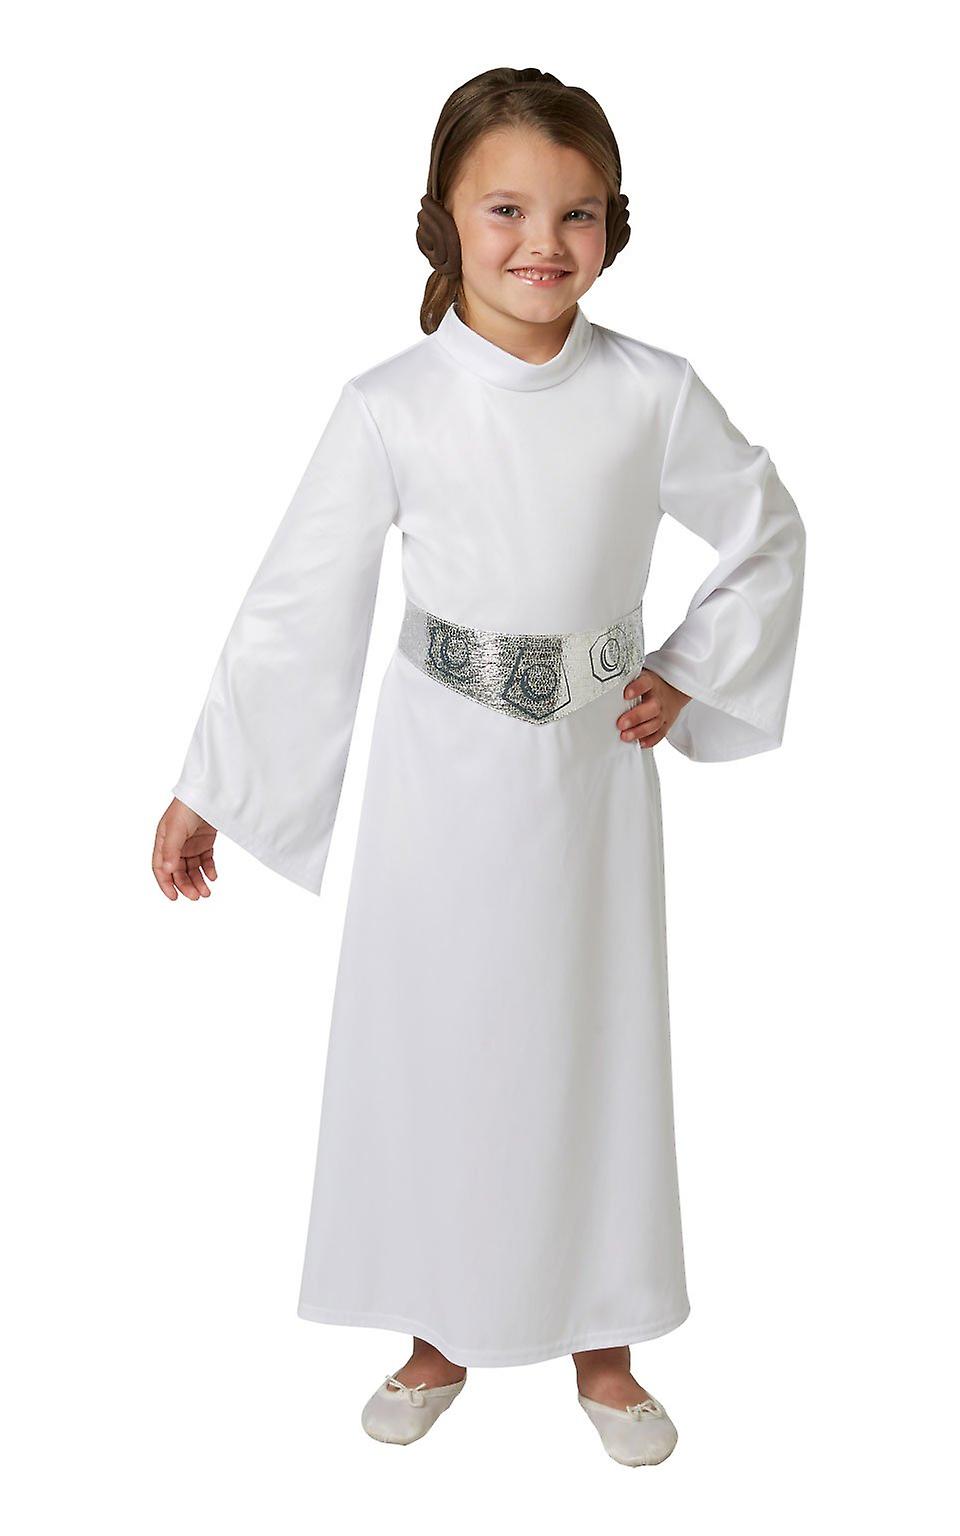 Princess leia classic costume for kids disney star wars 630878l